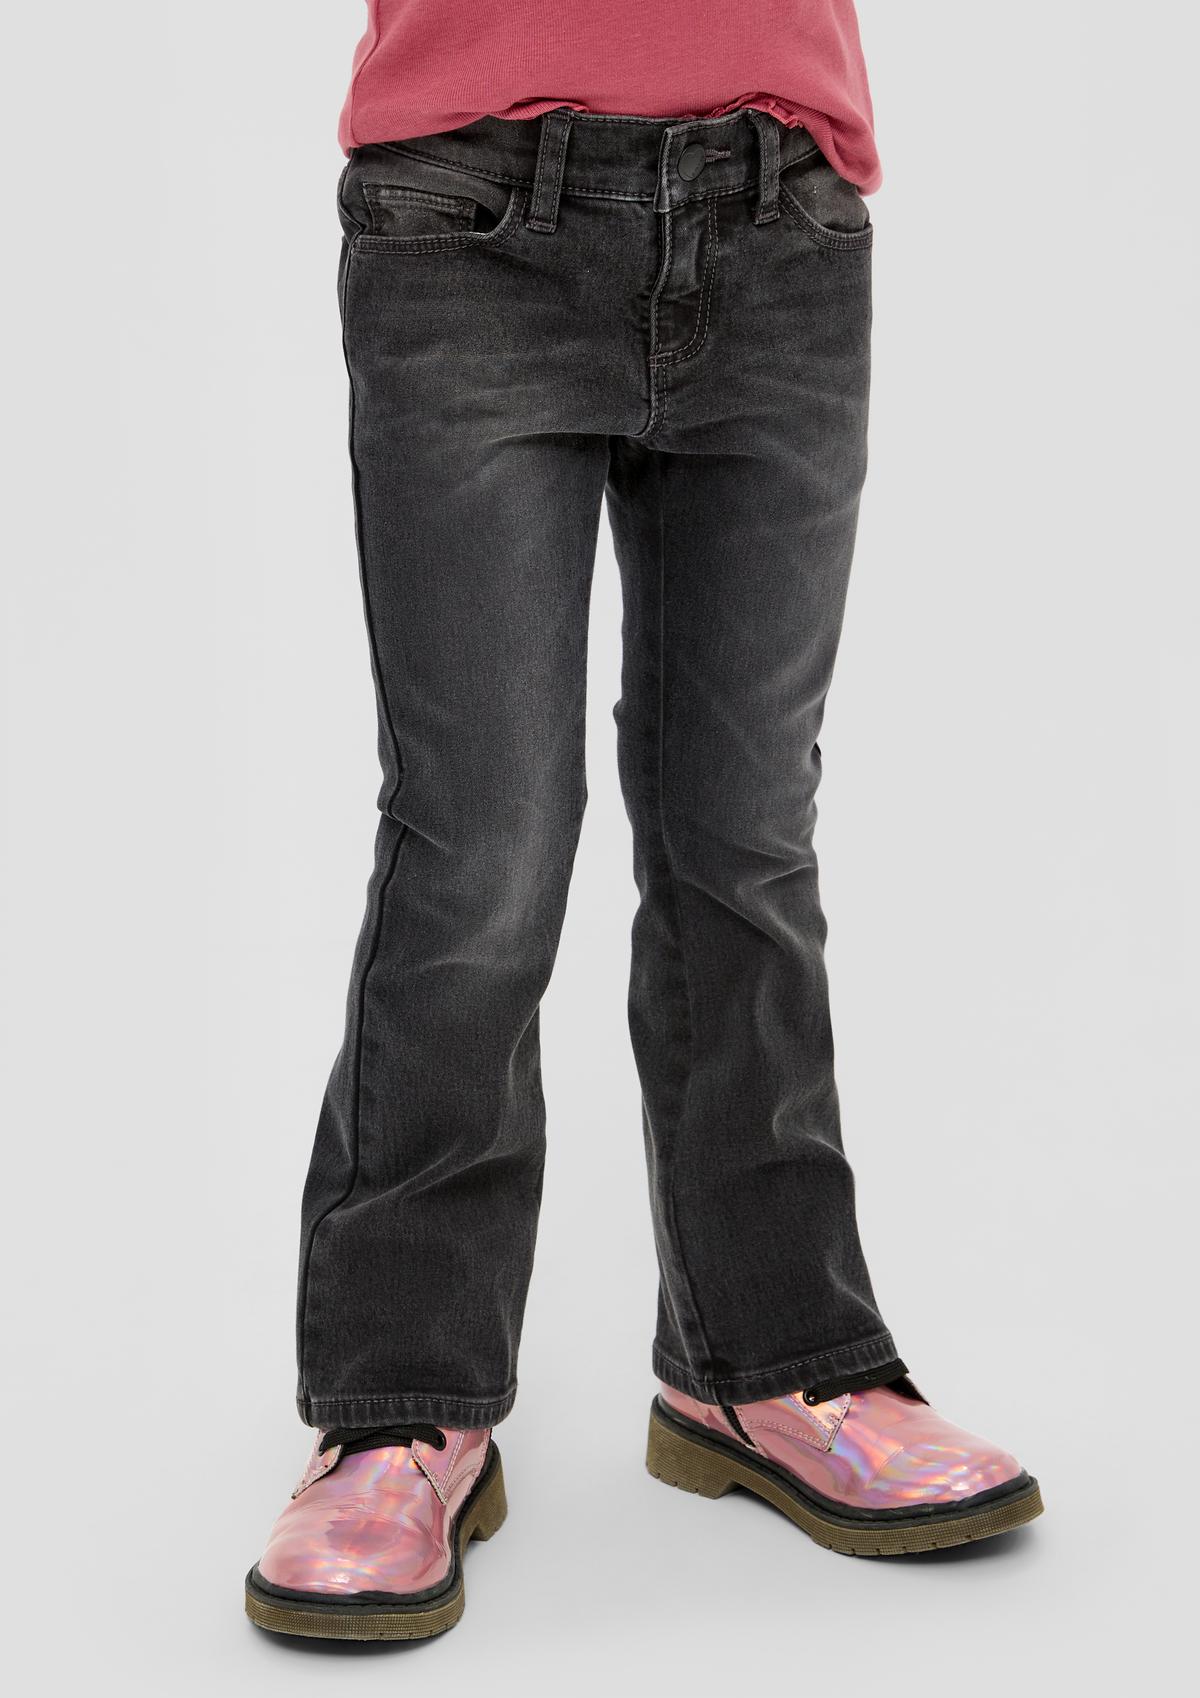 Betsy jeans / regular fit / mid rise / slim leg